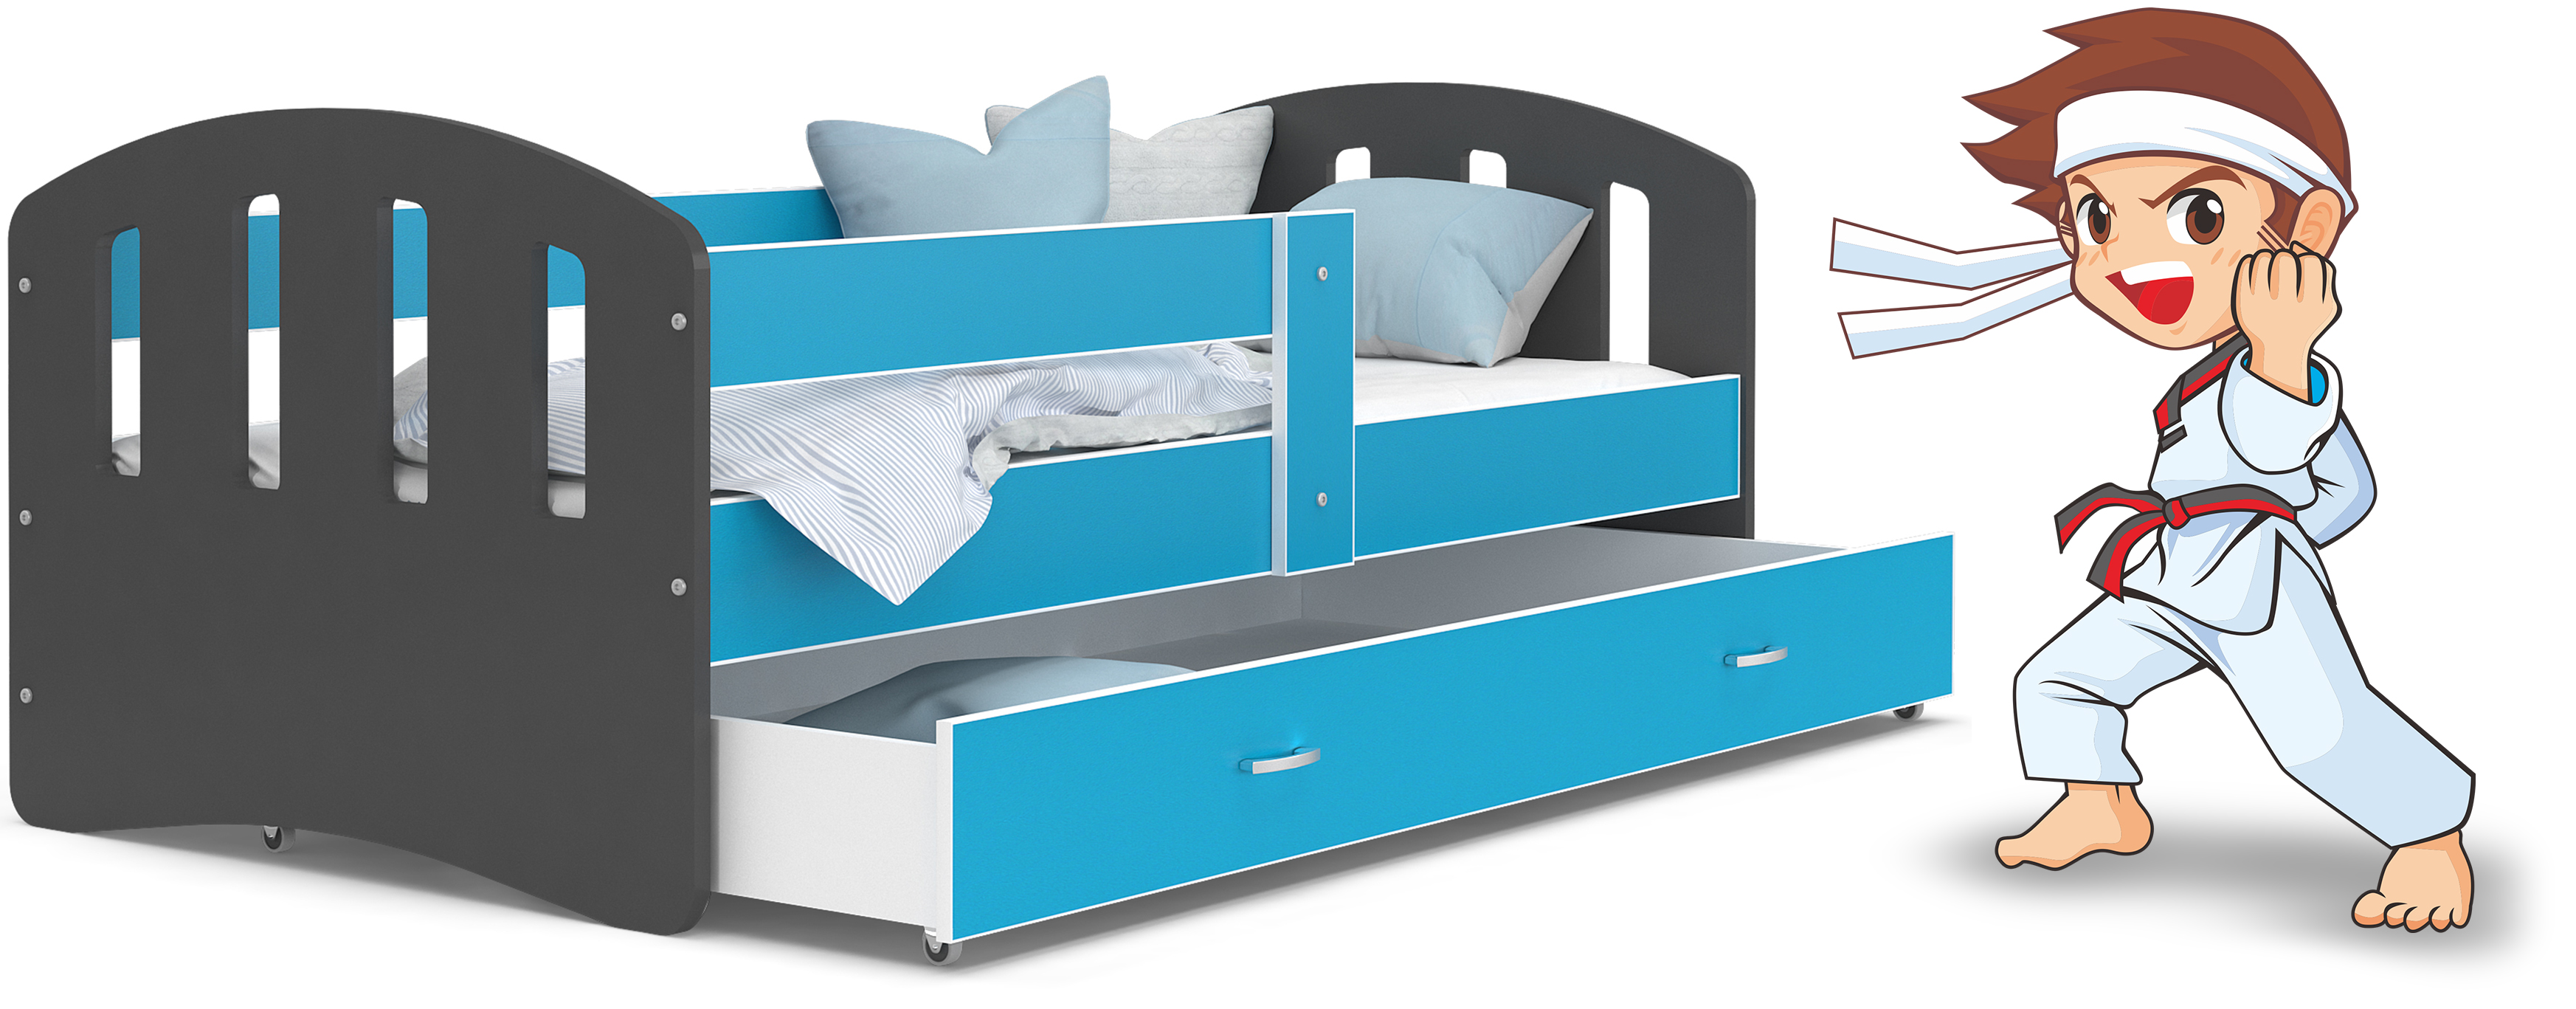 Dětská postel s šuplíkem a zábranama | Bezpečná postel pro děti | Postel pro děti | Postel se zábranama